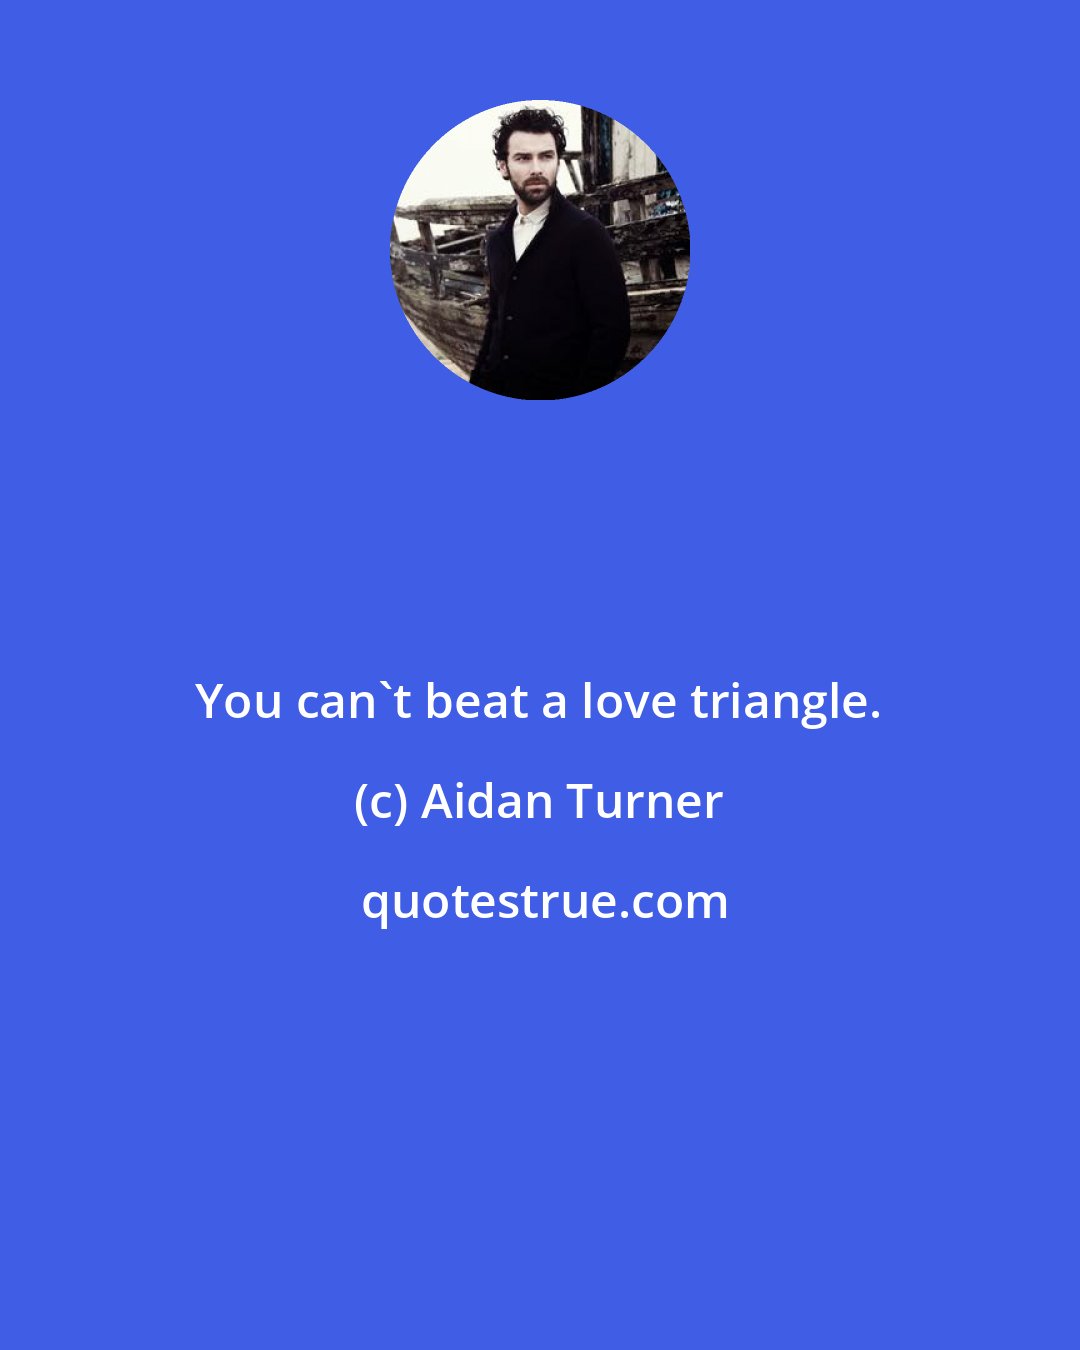 Aidan Turner: You can't beat a love triangle.